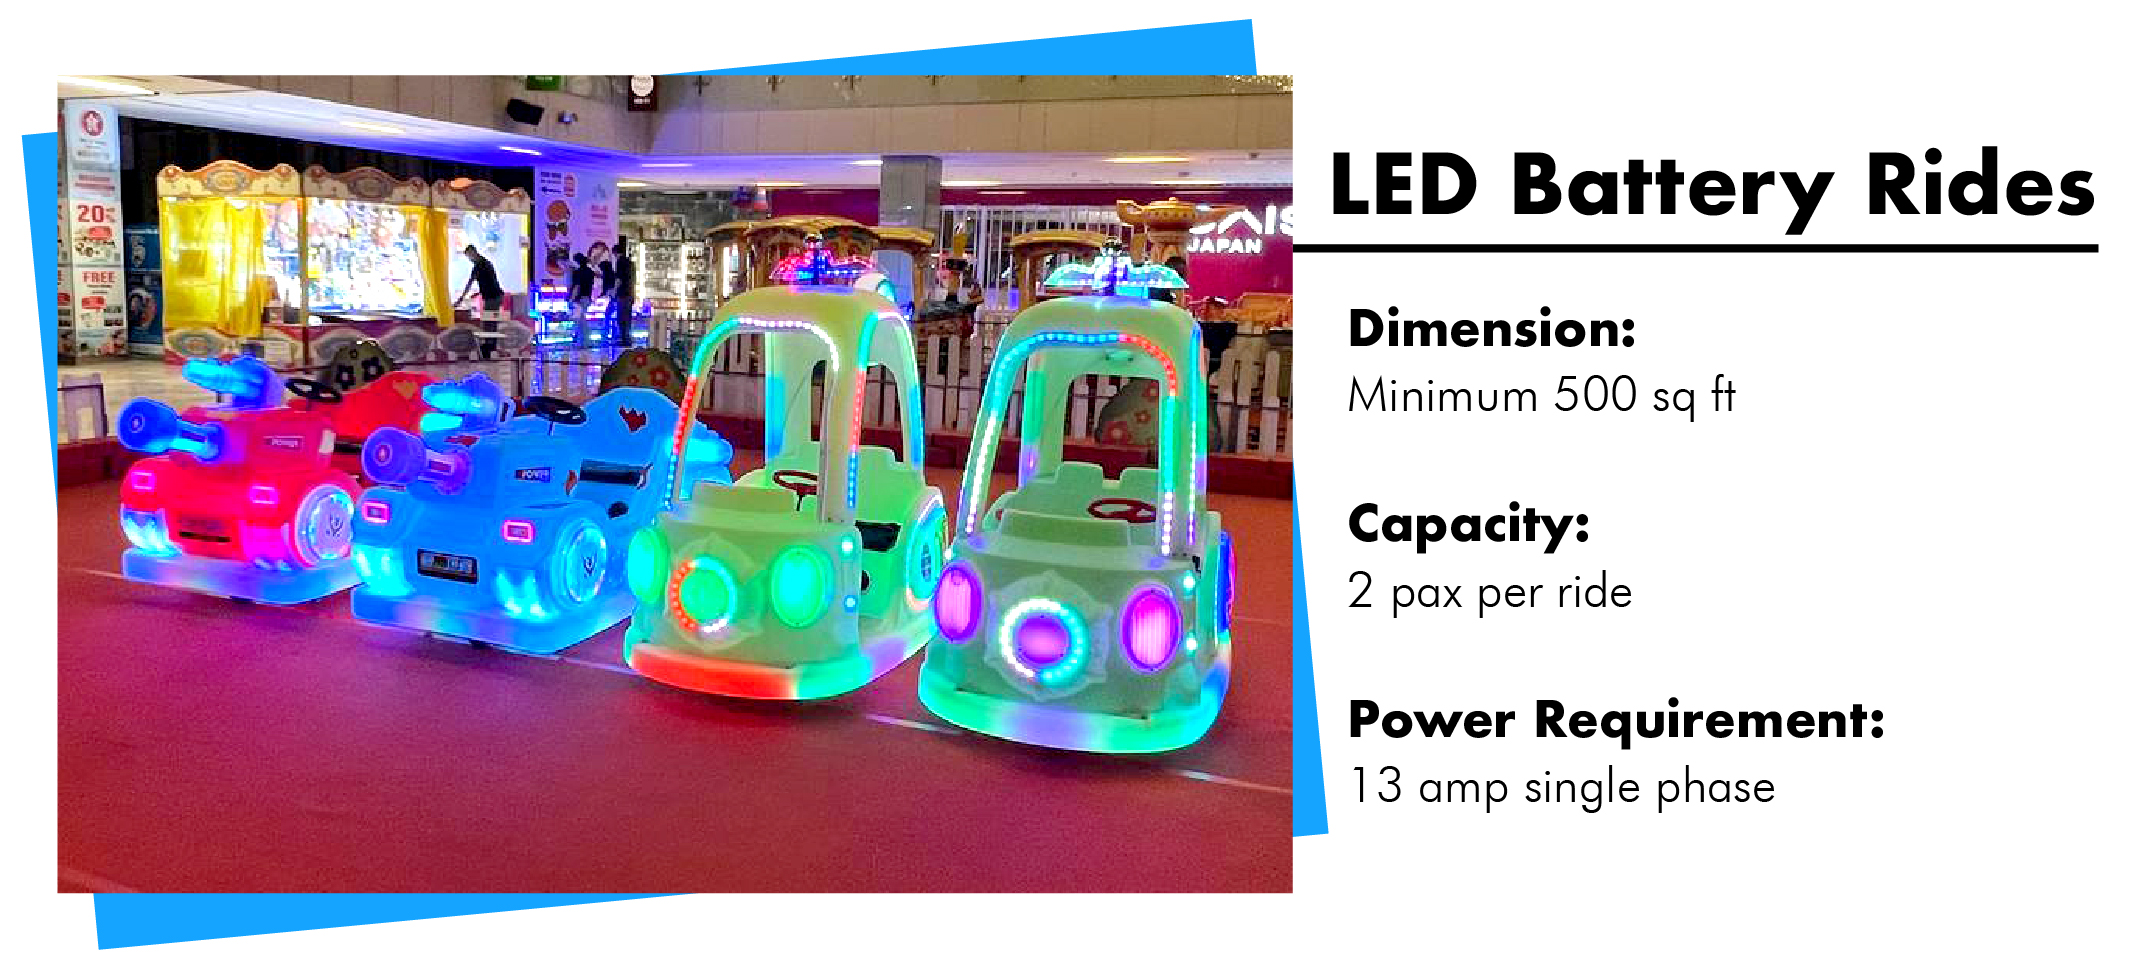 LED Battery Rides